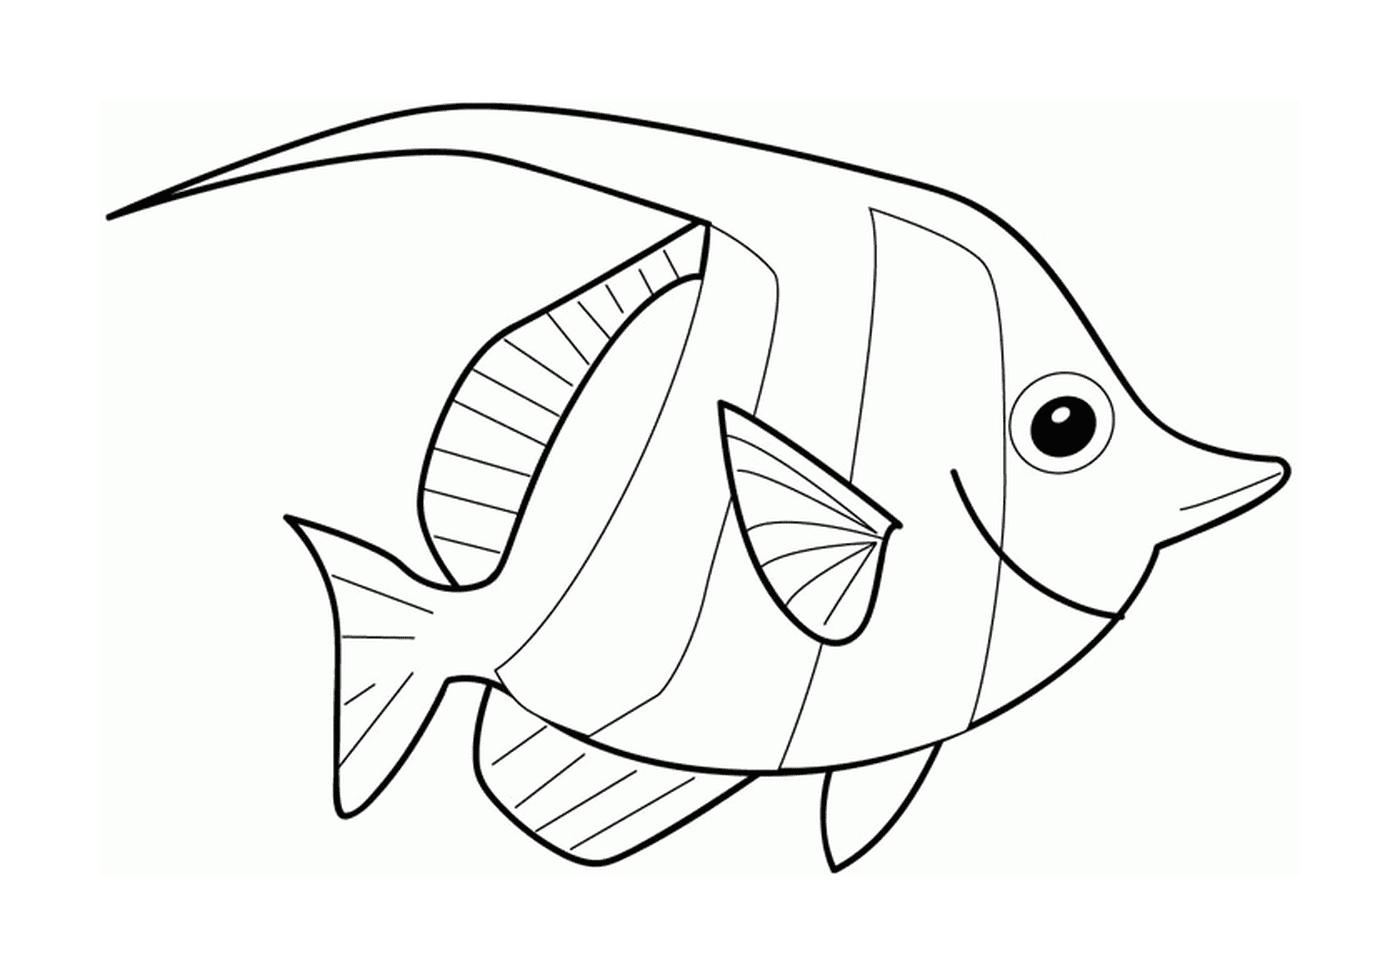   Un poisson 